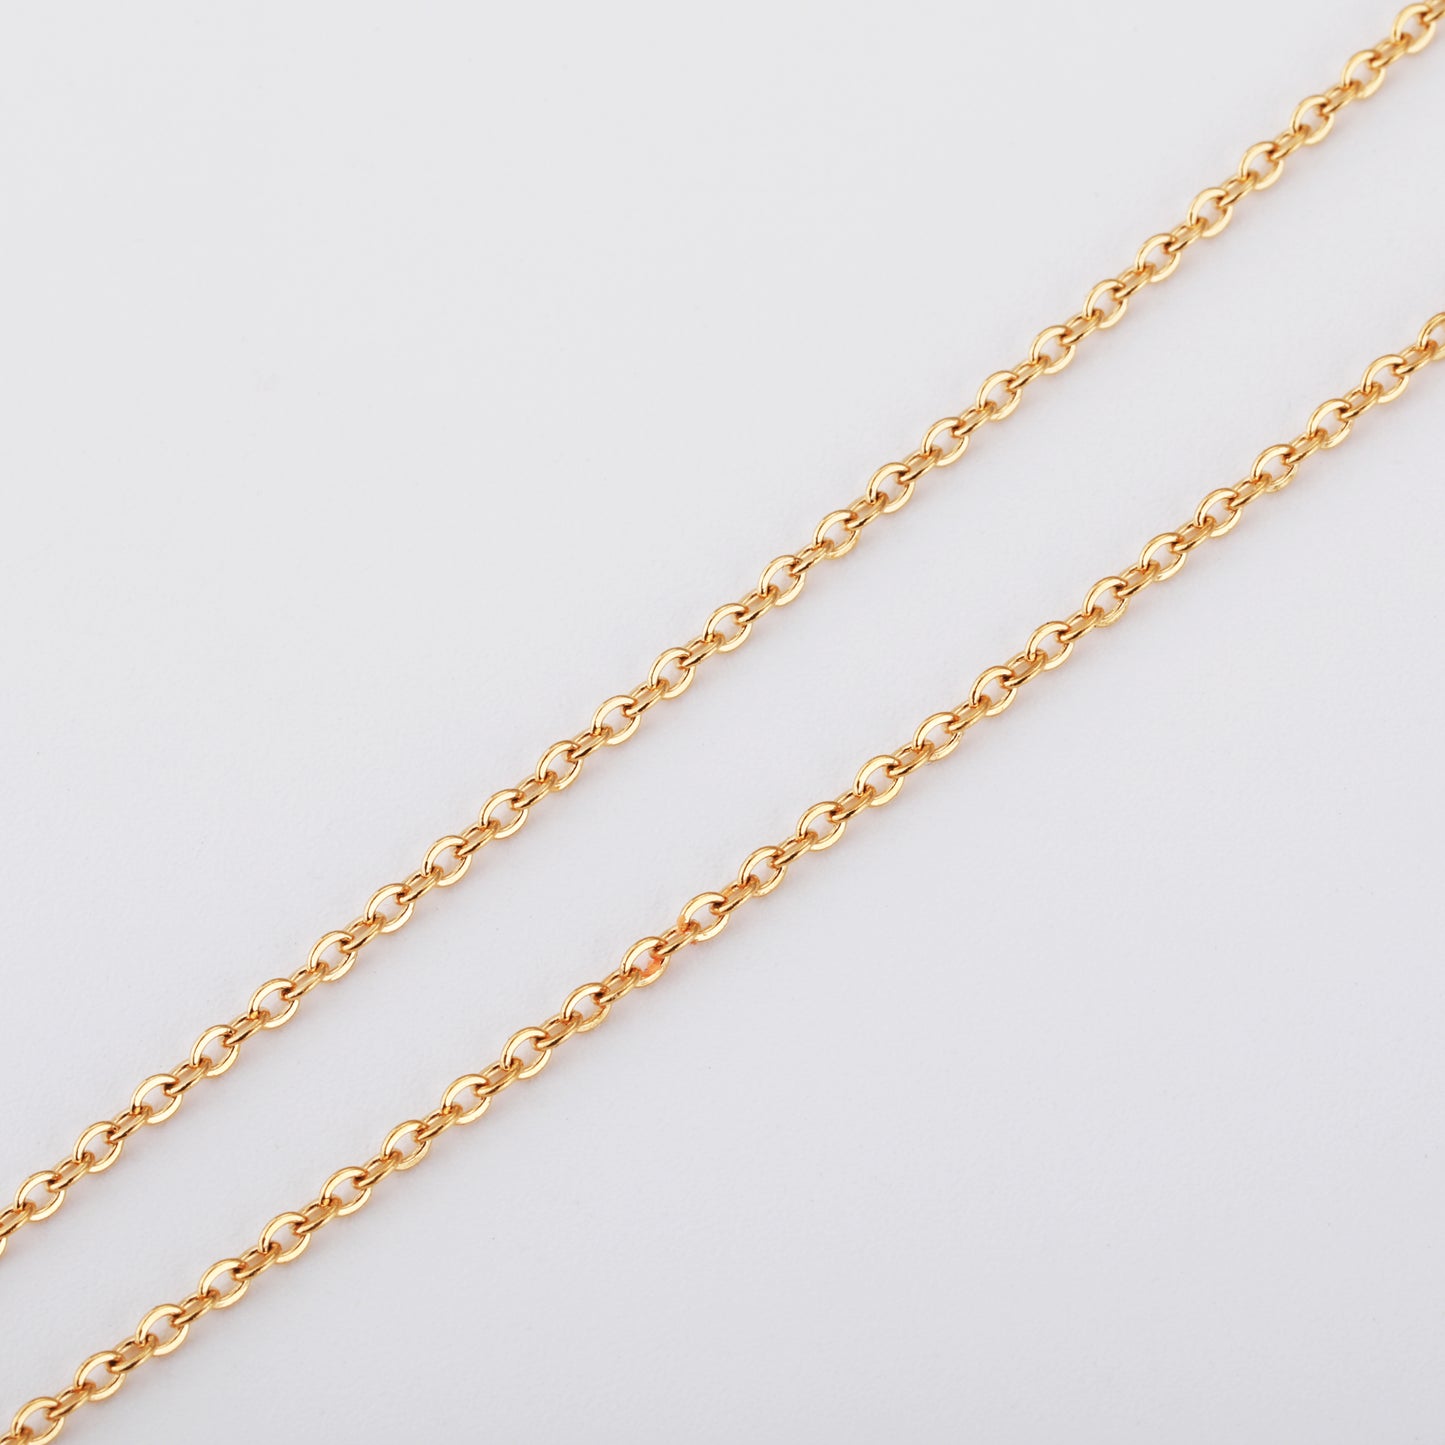 Darjali Jewelry Botanical Moon Necklace 18K Gold Chain